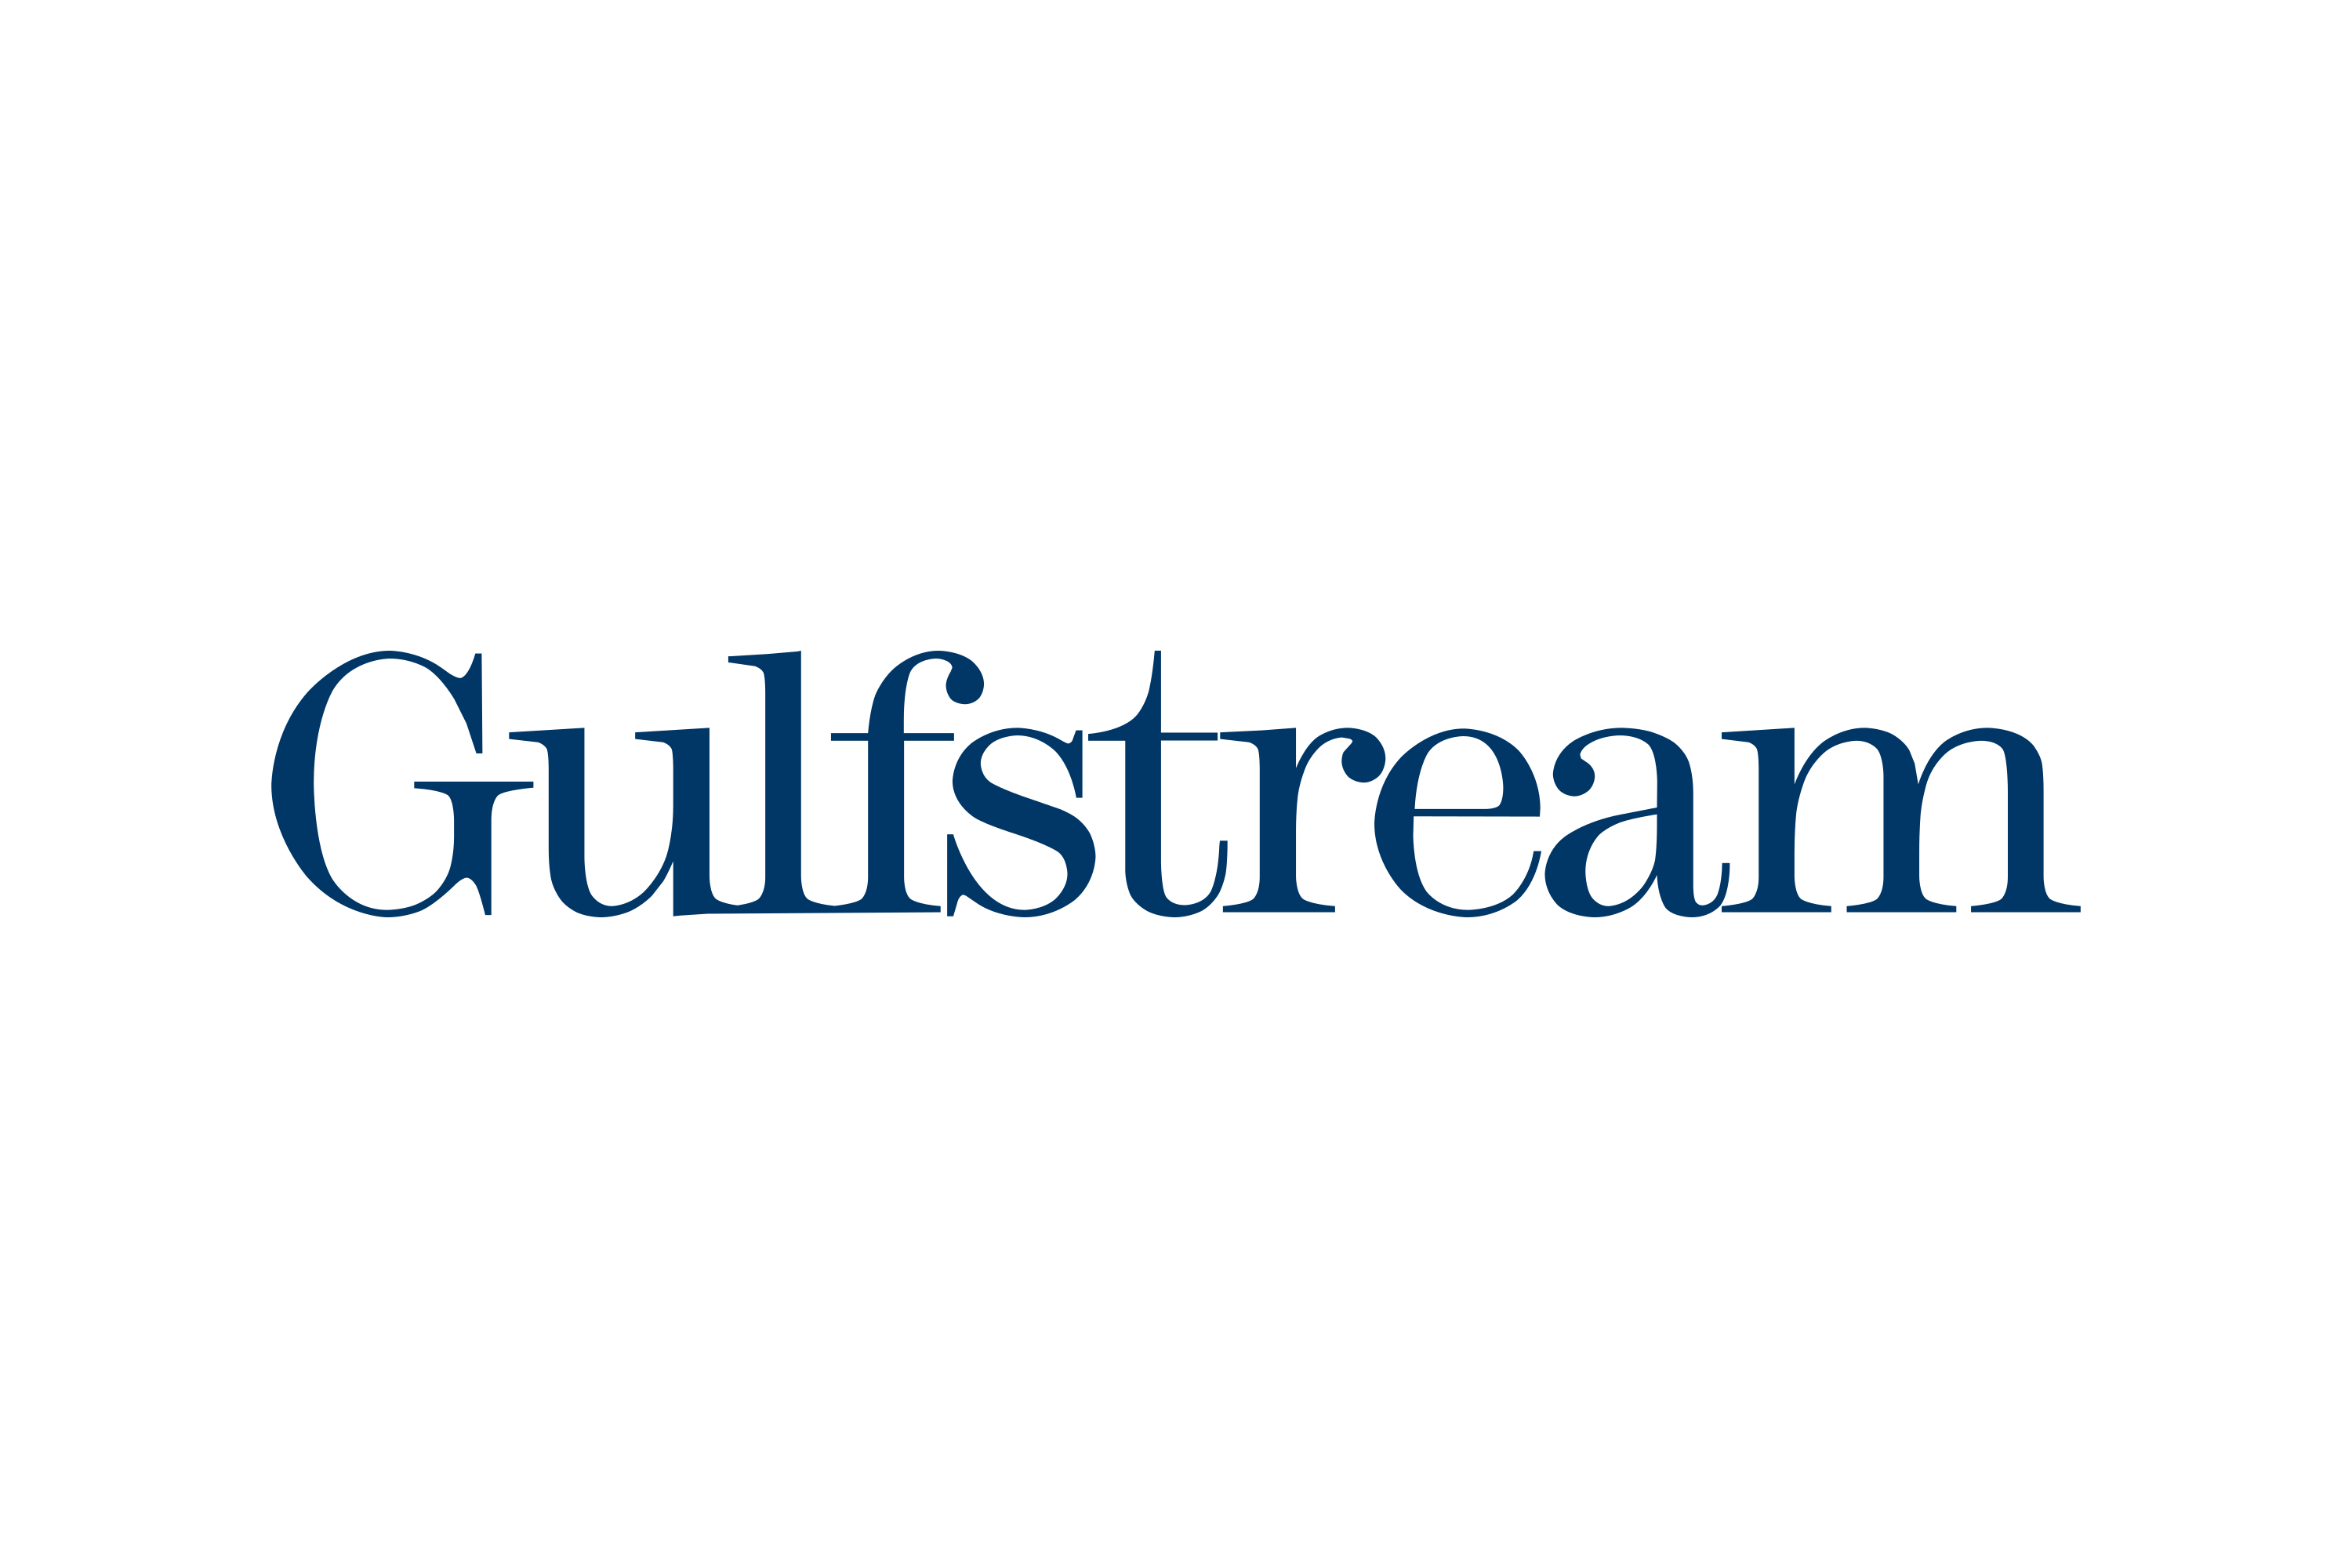 gulfstream.com